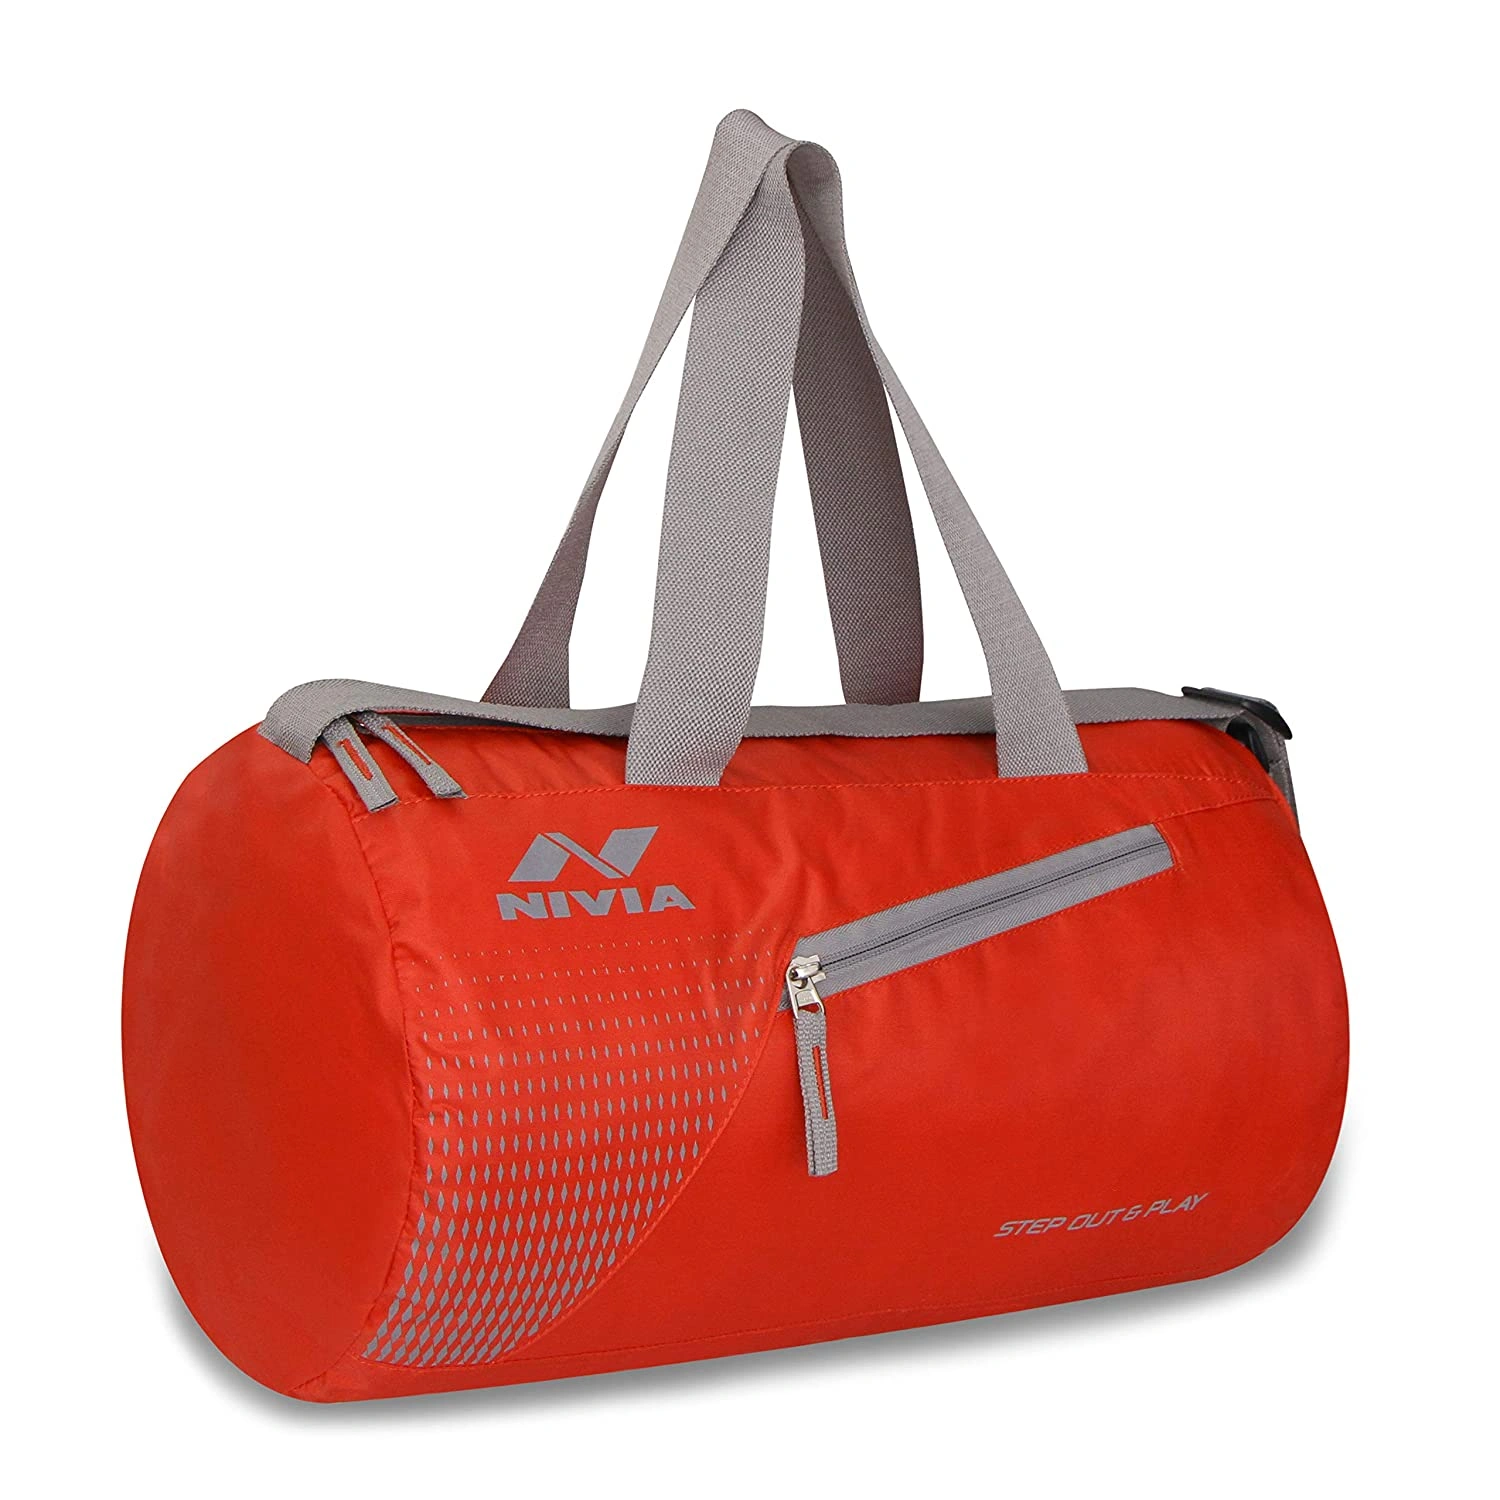 NIVIA Deflate Round 01 Polyester Gym Bag-RED/GREY-1